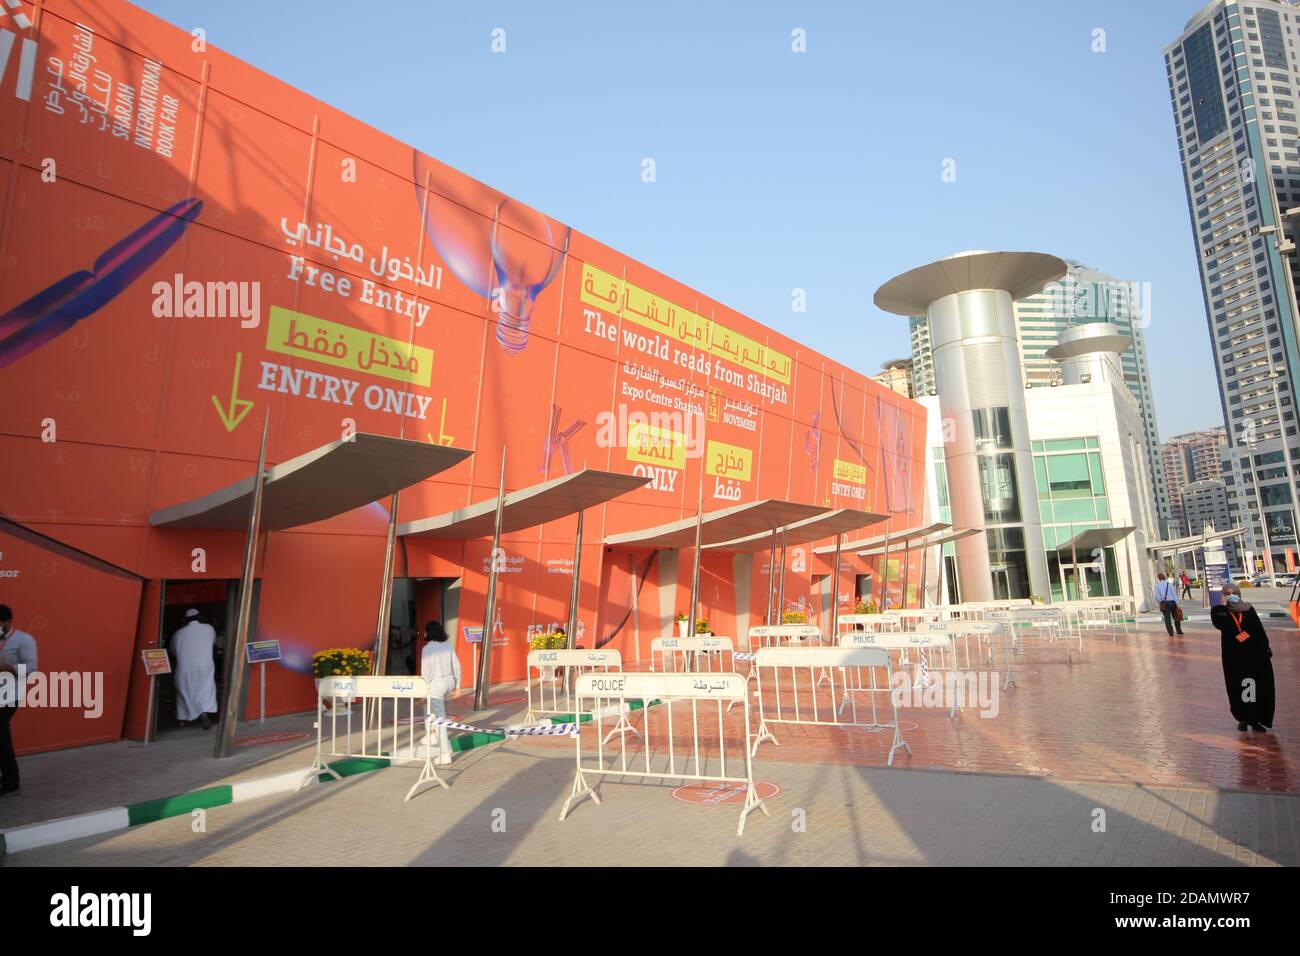 Sharjah International Book Fair (4.-14. November 2020) im Expo Centre Sharjah, VAE. Die Mega-Handelsmesse präsentiert 1,024 Verlage aus 73 Ländern. Stockfoto